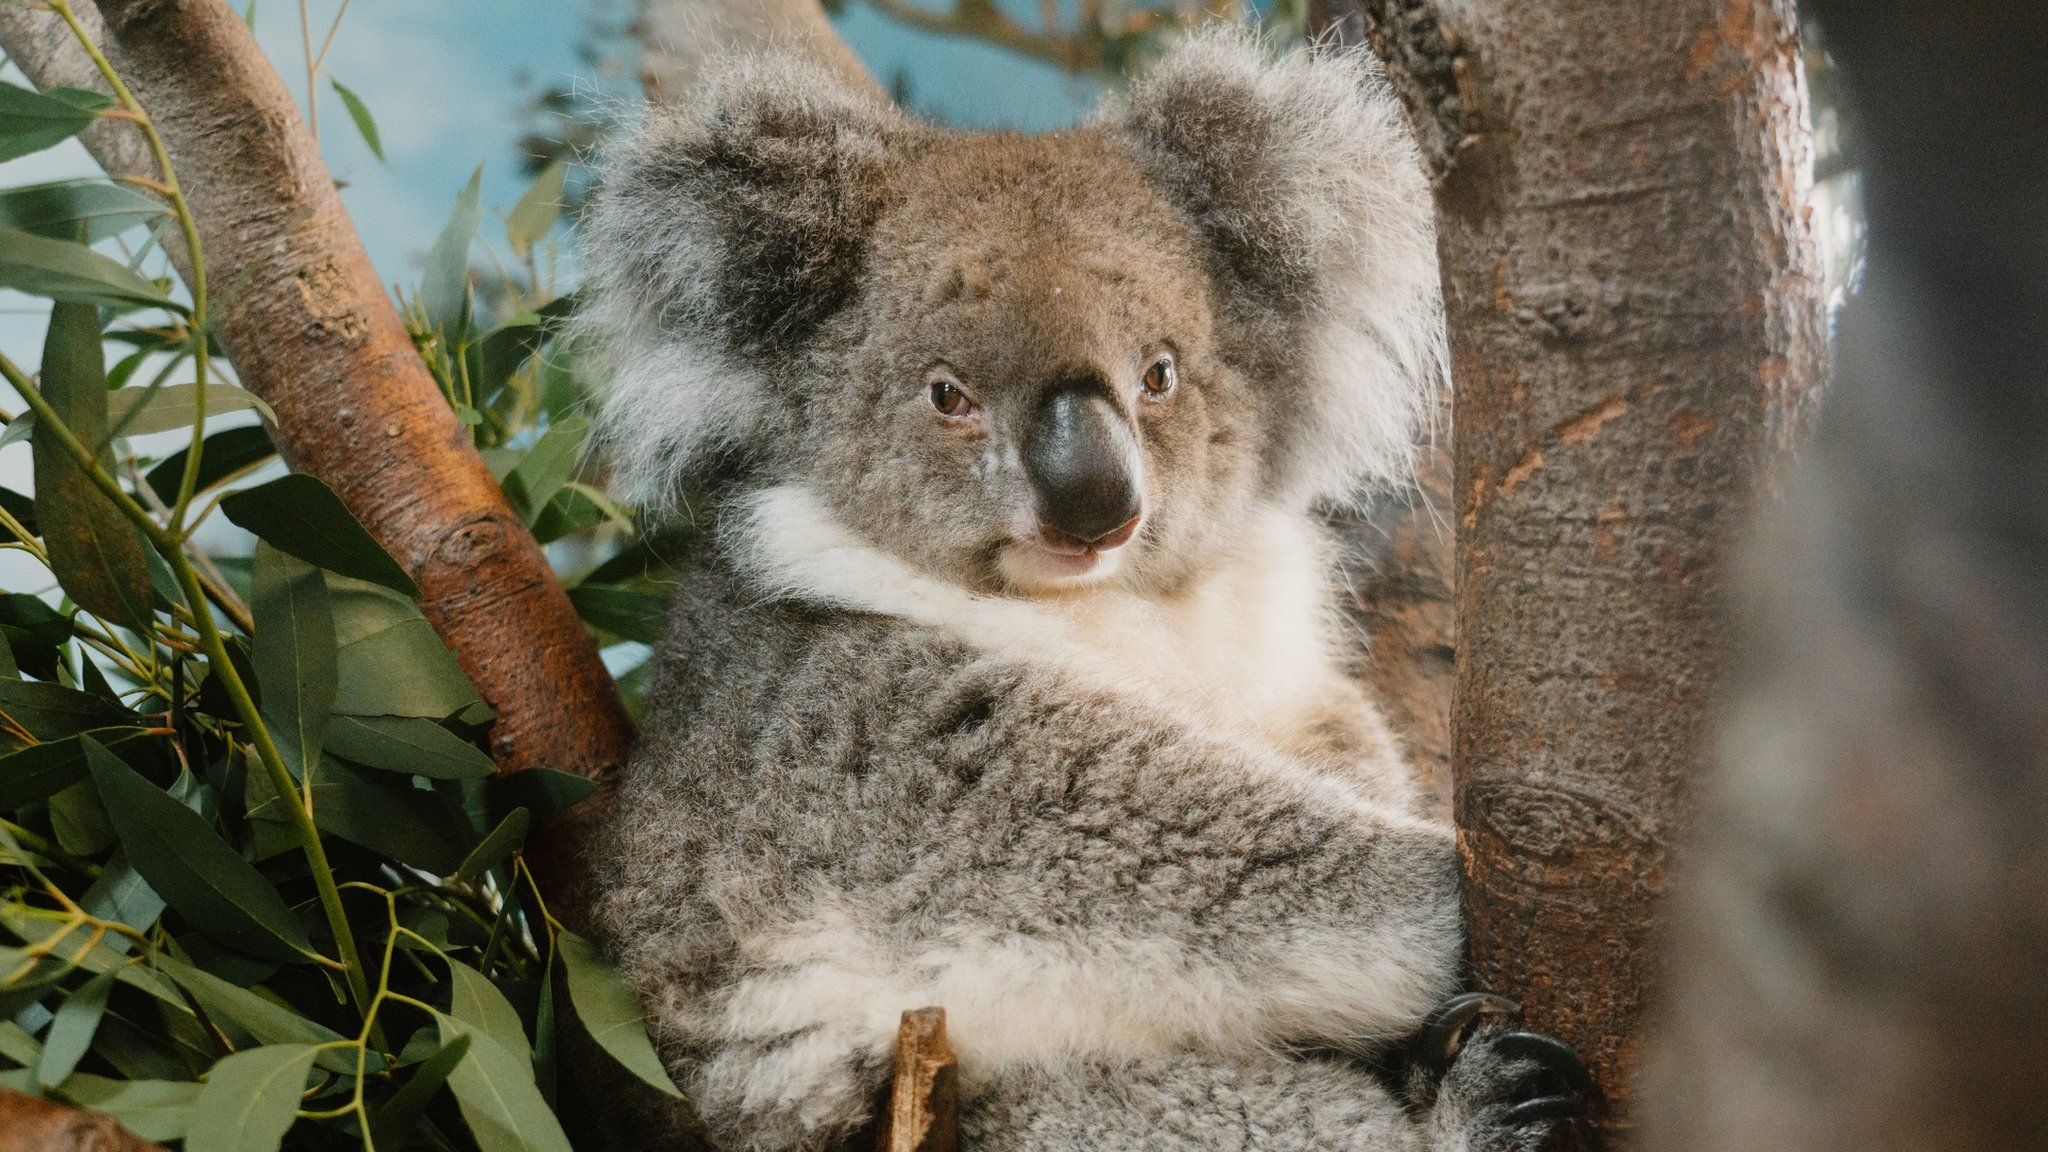 Koala up in a tree looking at the camera